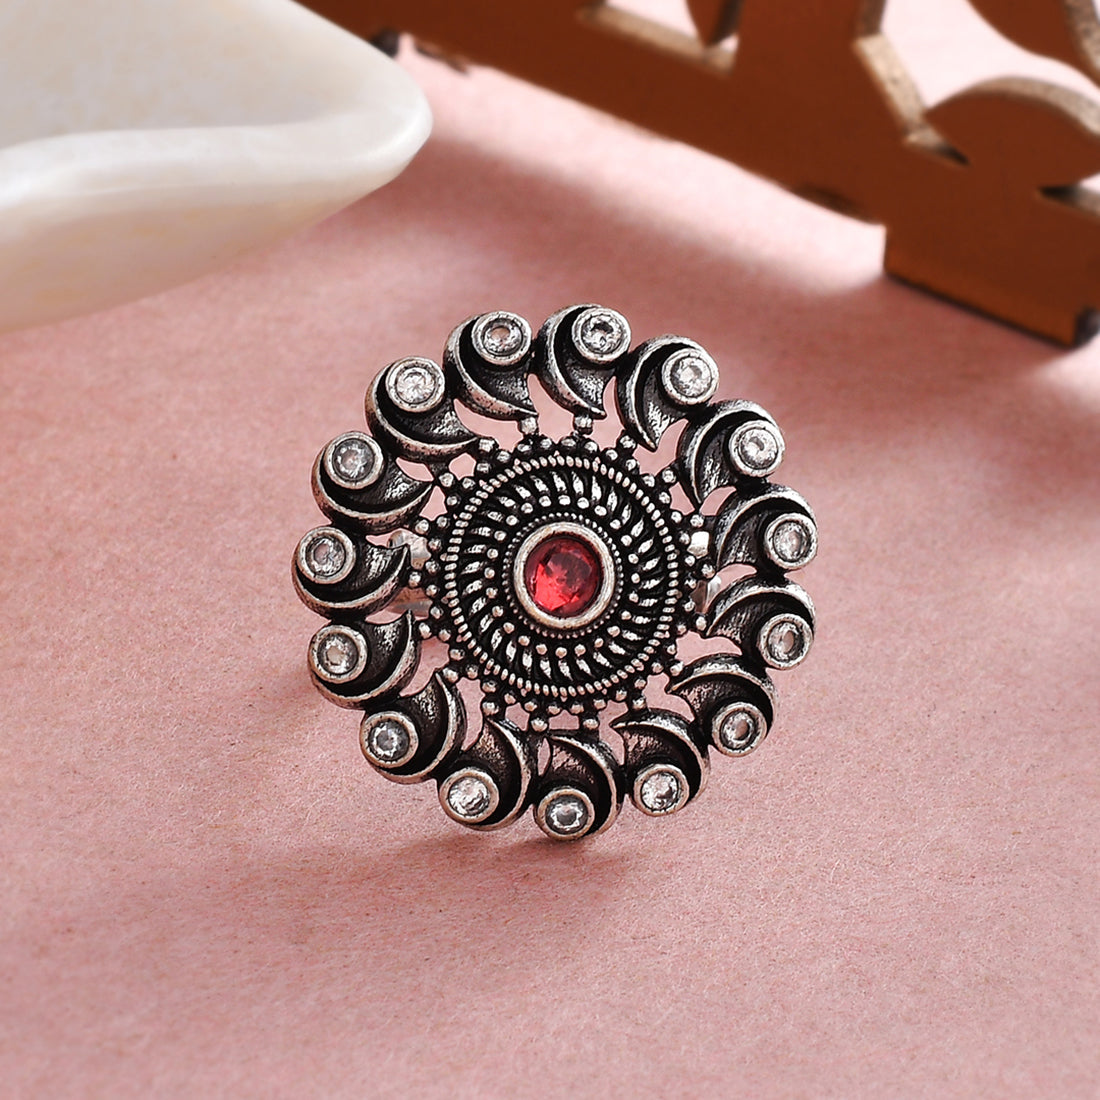 Women's Abharan Red And White Round Cut Stones Ring - Voylla